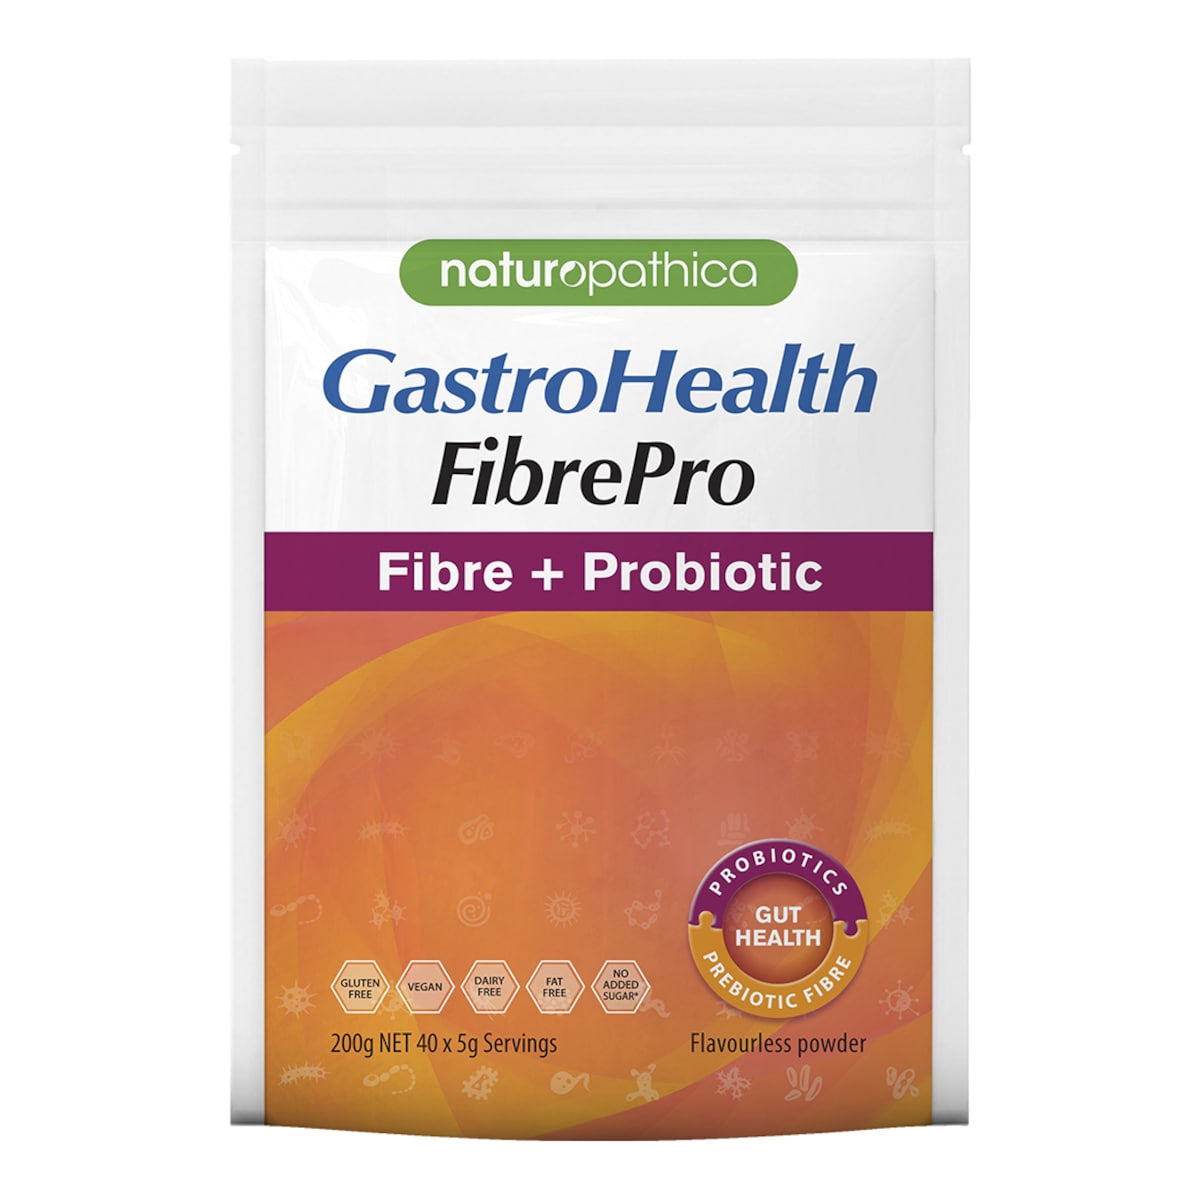 Naturopathica GastroHealth Fibrepro Fibre + Probiotic Powder 200g